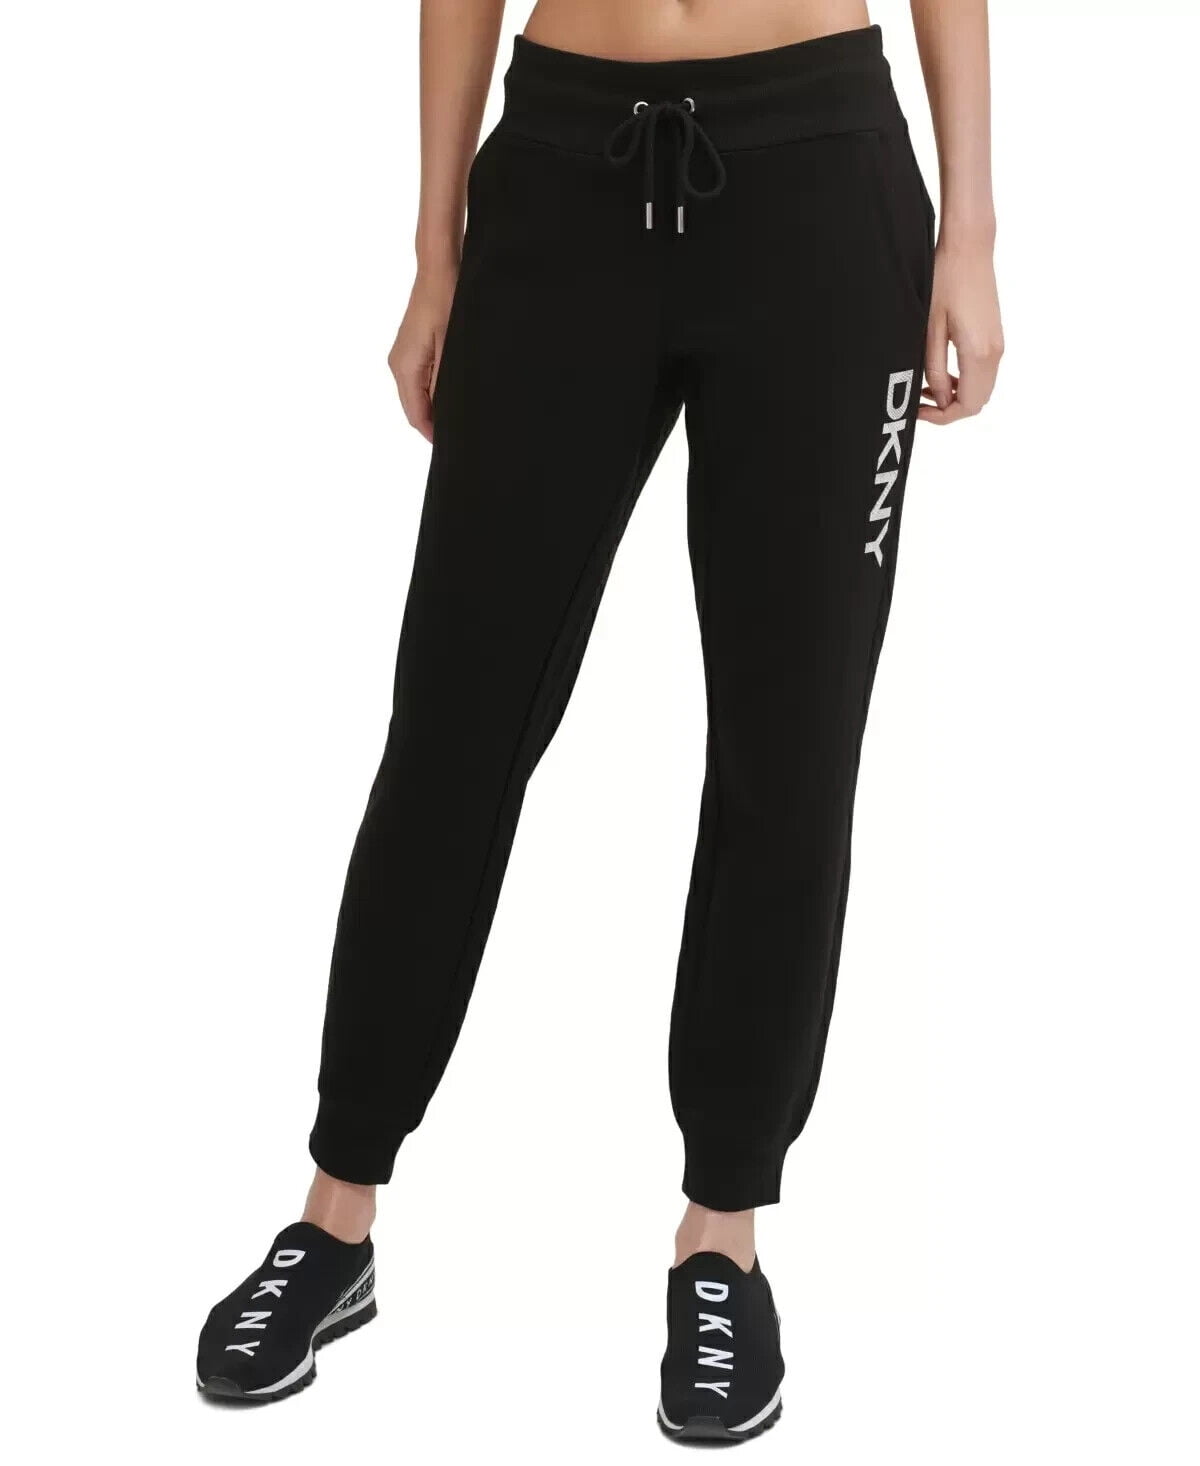 Buyr.com | Leggings | DKNY Women's Tummy Control Workout Yoga Leggings,  Black with Cityscape Logo, XL